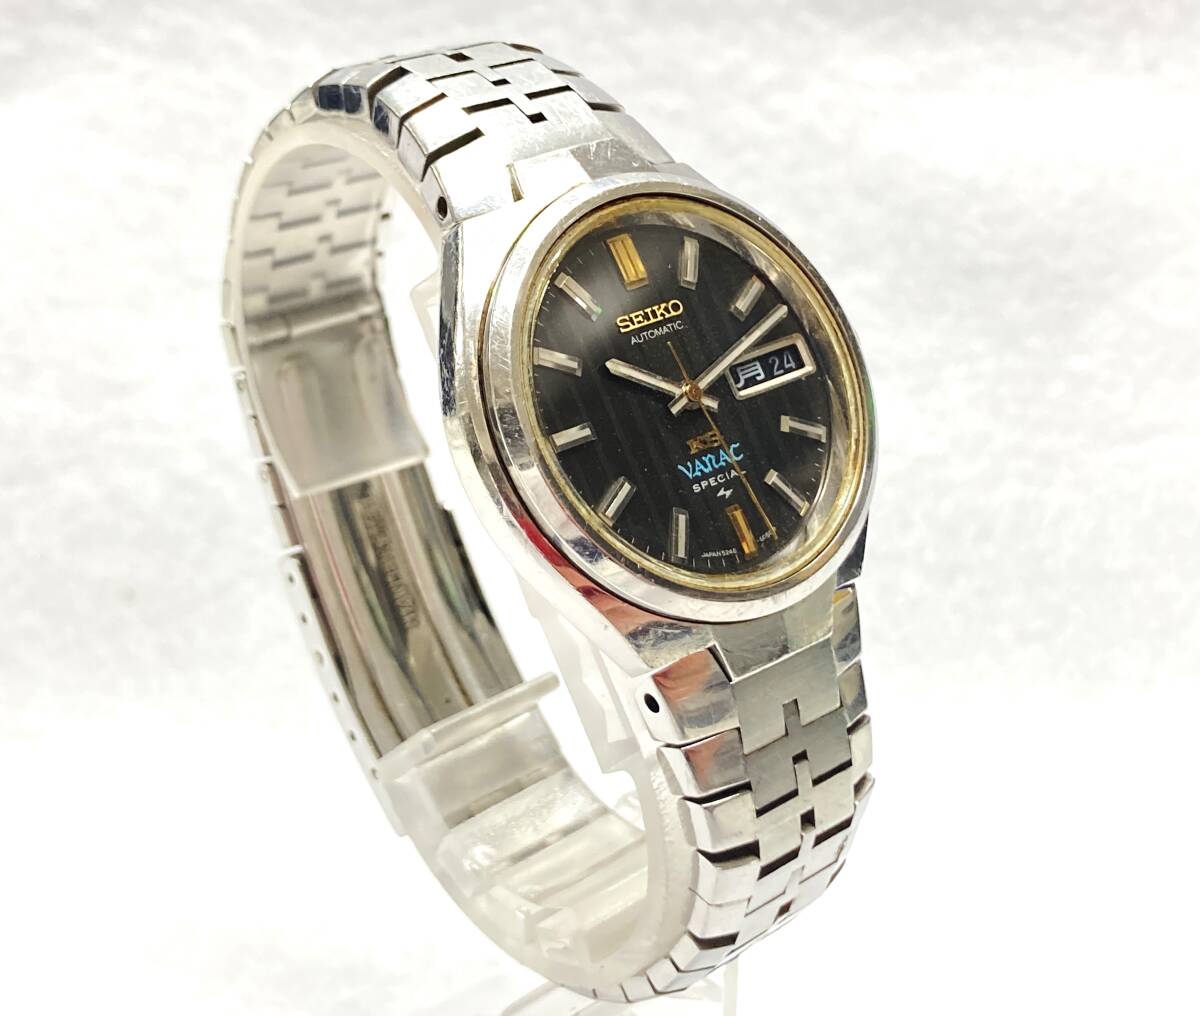 SEIKO KS キングセイコー 5246-6040 VANAC バナックスペシャル 自動巻 腕時計 デイデイト シルバーカラー メンズ ジャンク品の画像2